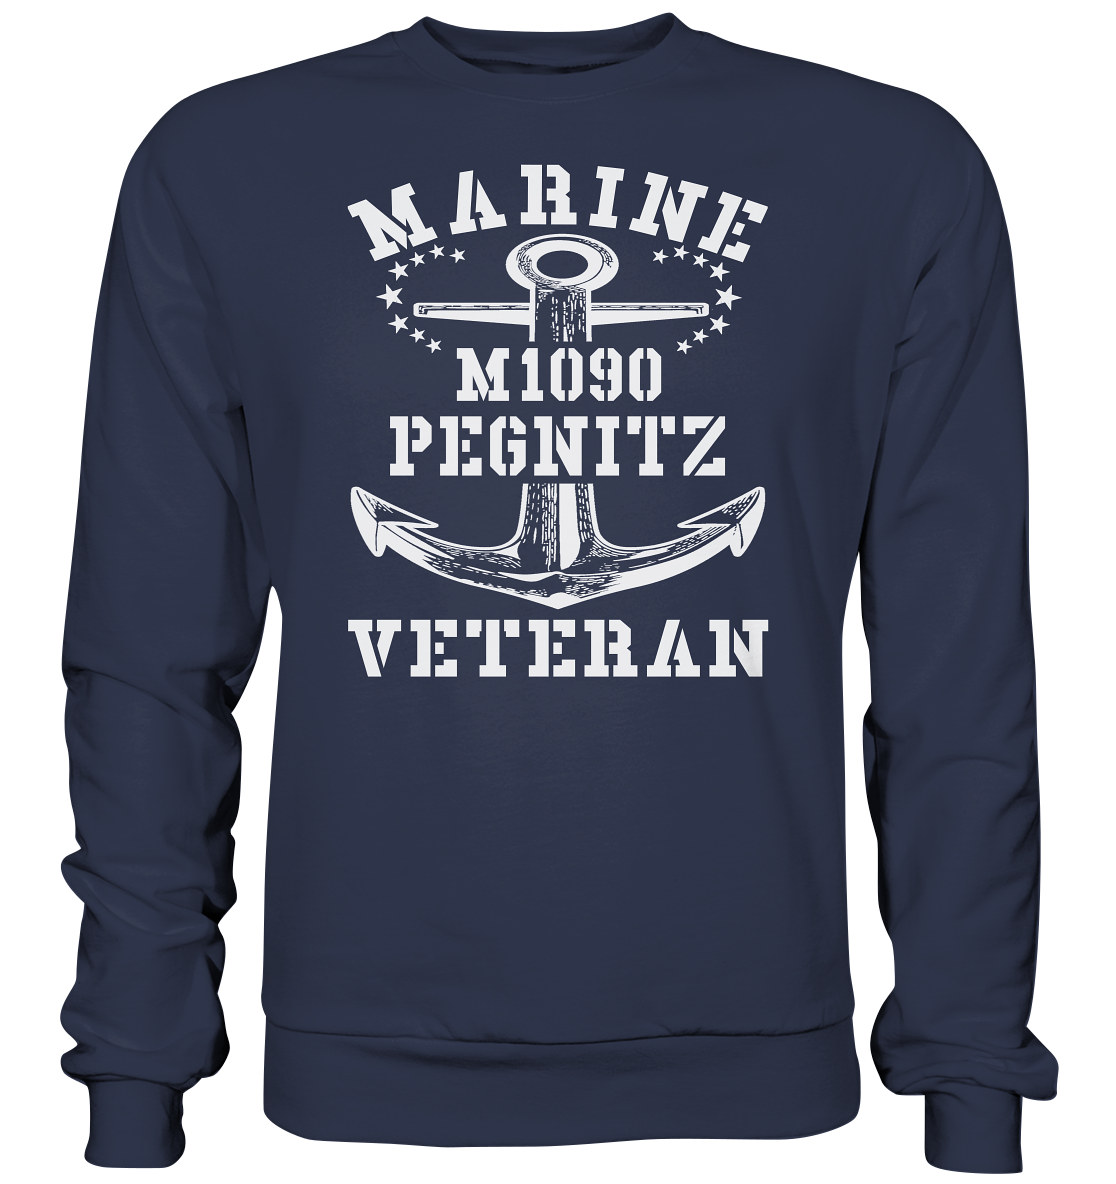 M1090 PEGNITZ Marine Veteran - Premium Sweatshirt